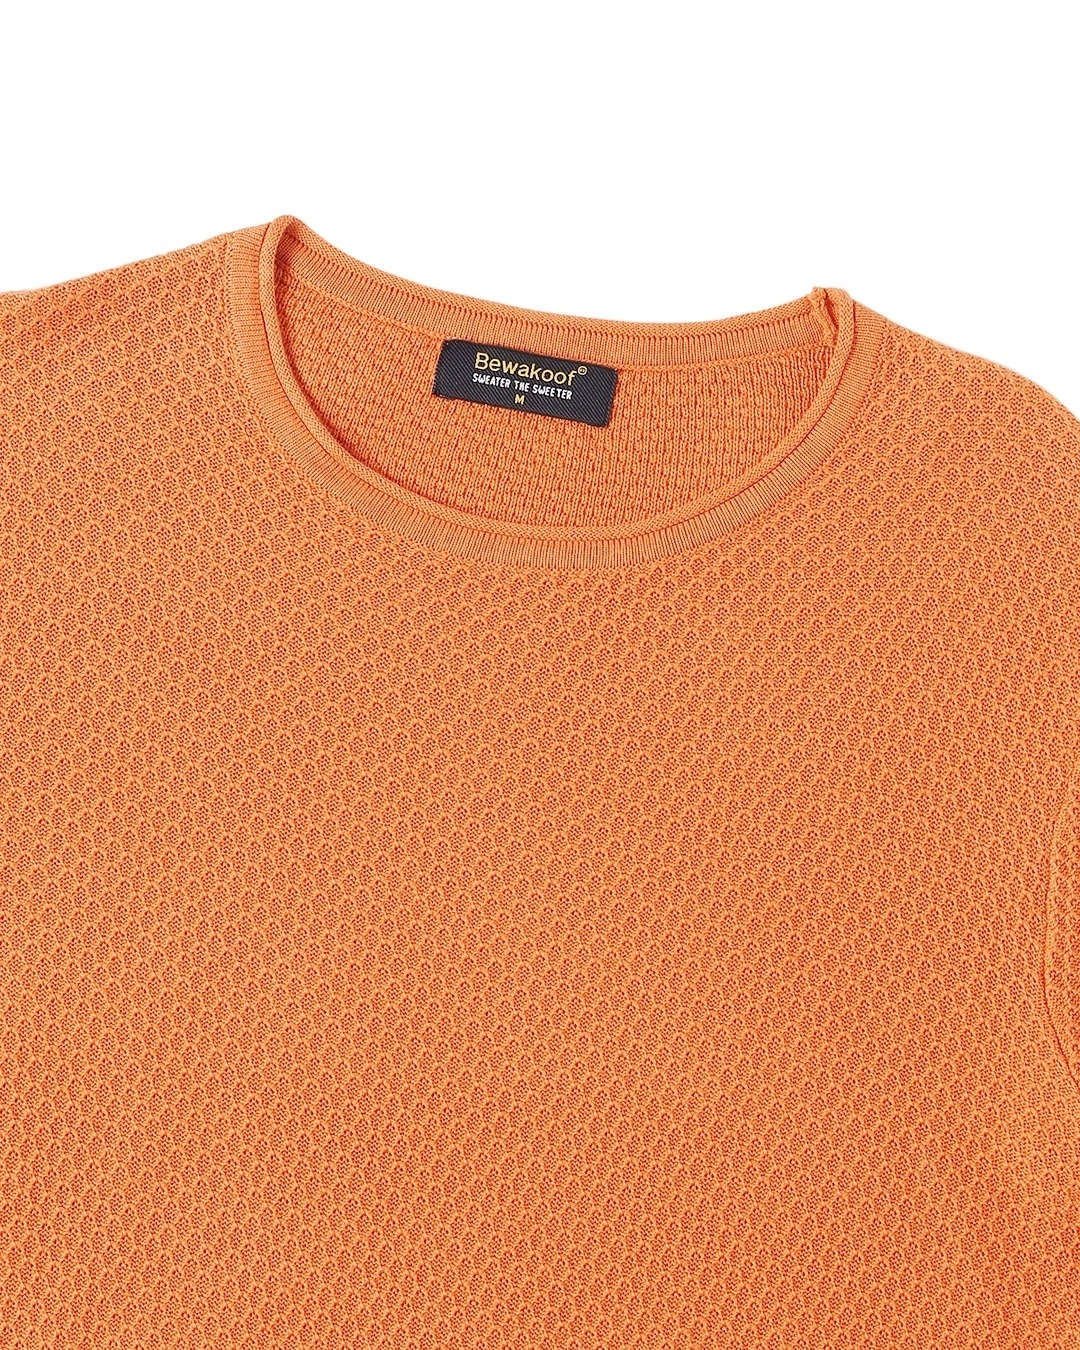 Shop Burnt Orange Flat Knit Sweater